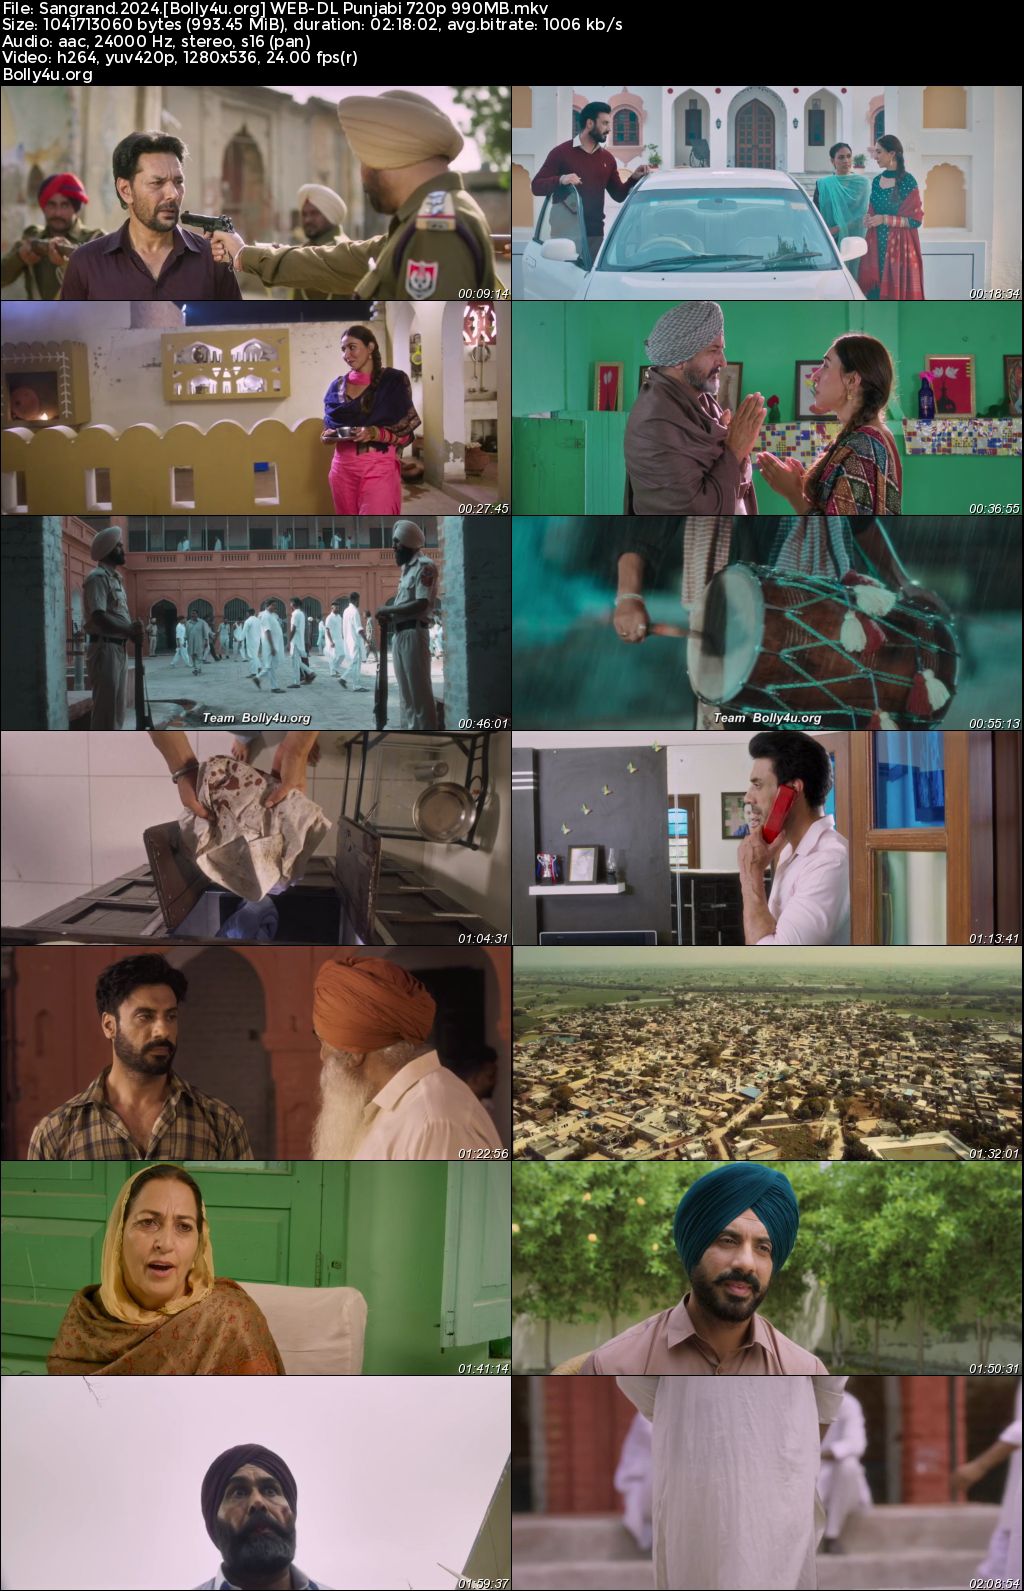 Sangrand 2024 WEB-DL Punjabi Full Movie Download 1080p 720p 480p